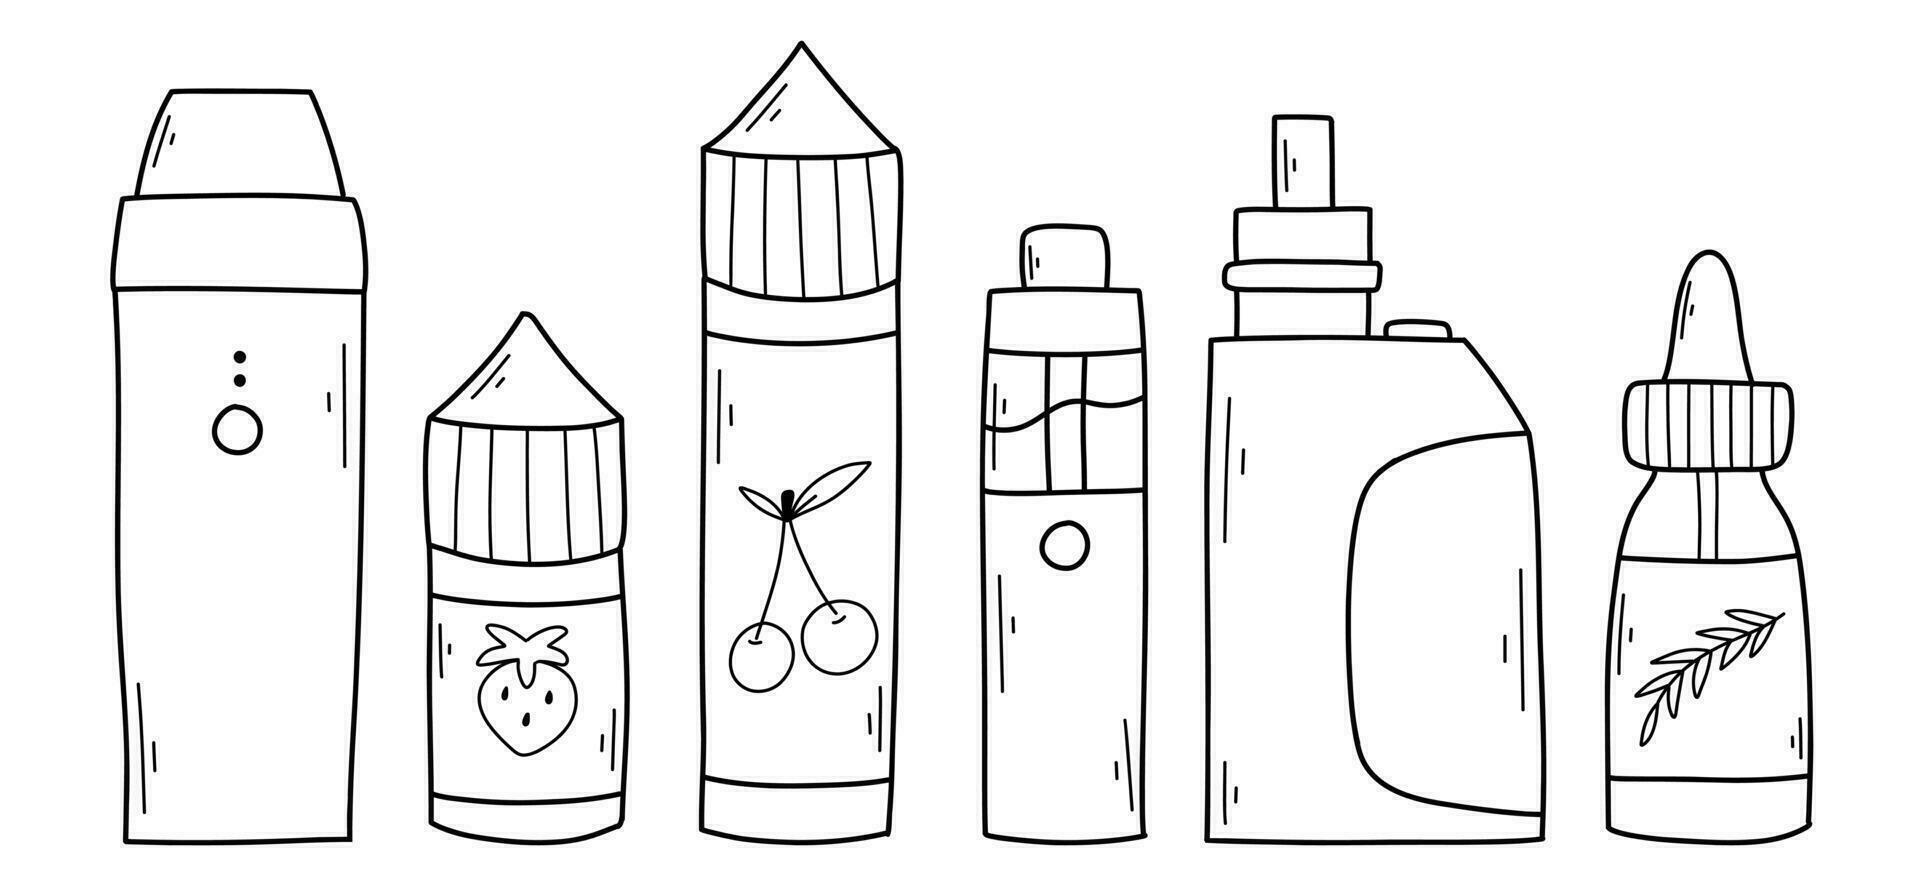 Vape set. vape liquids. Collection of electronic cigarettes in doodle style. Vector illustration.